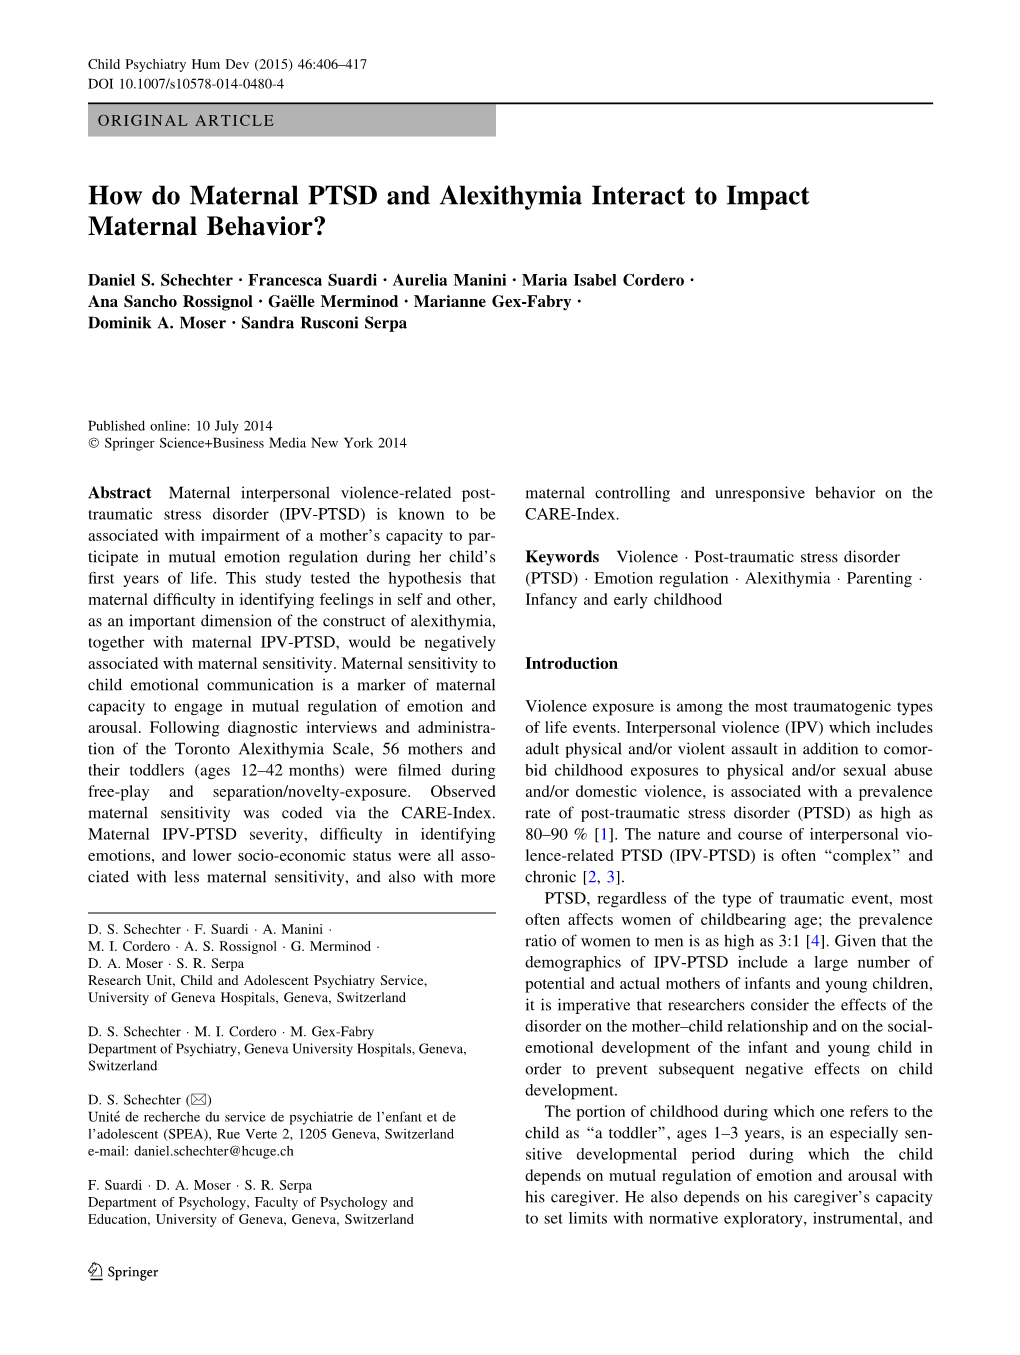 How Do Maternal PTSD and Alexithymia Interact to Impact Maternal Behavior?